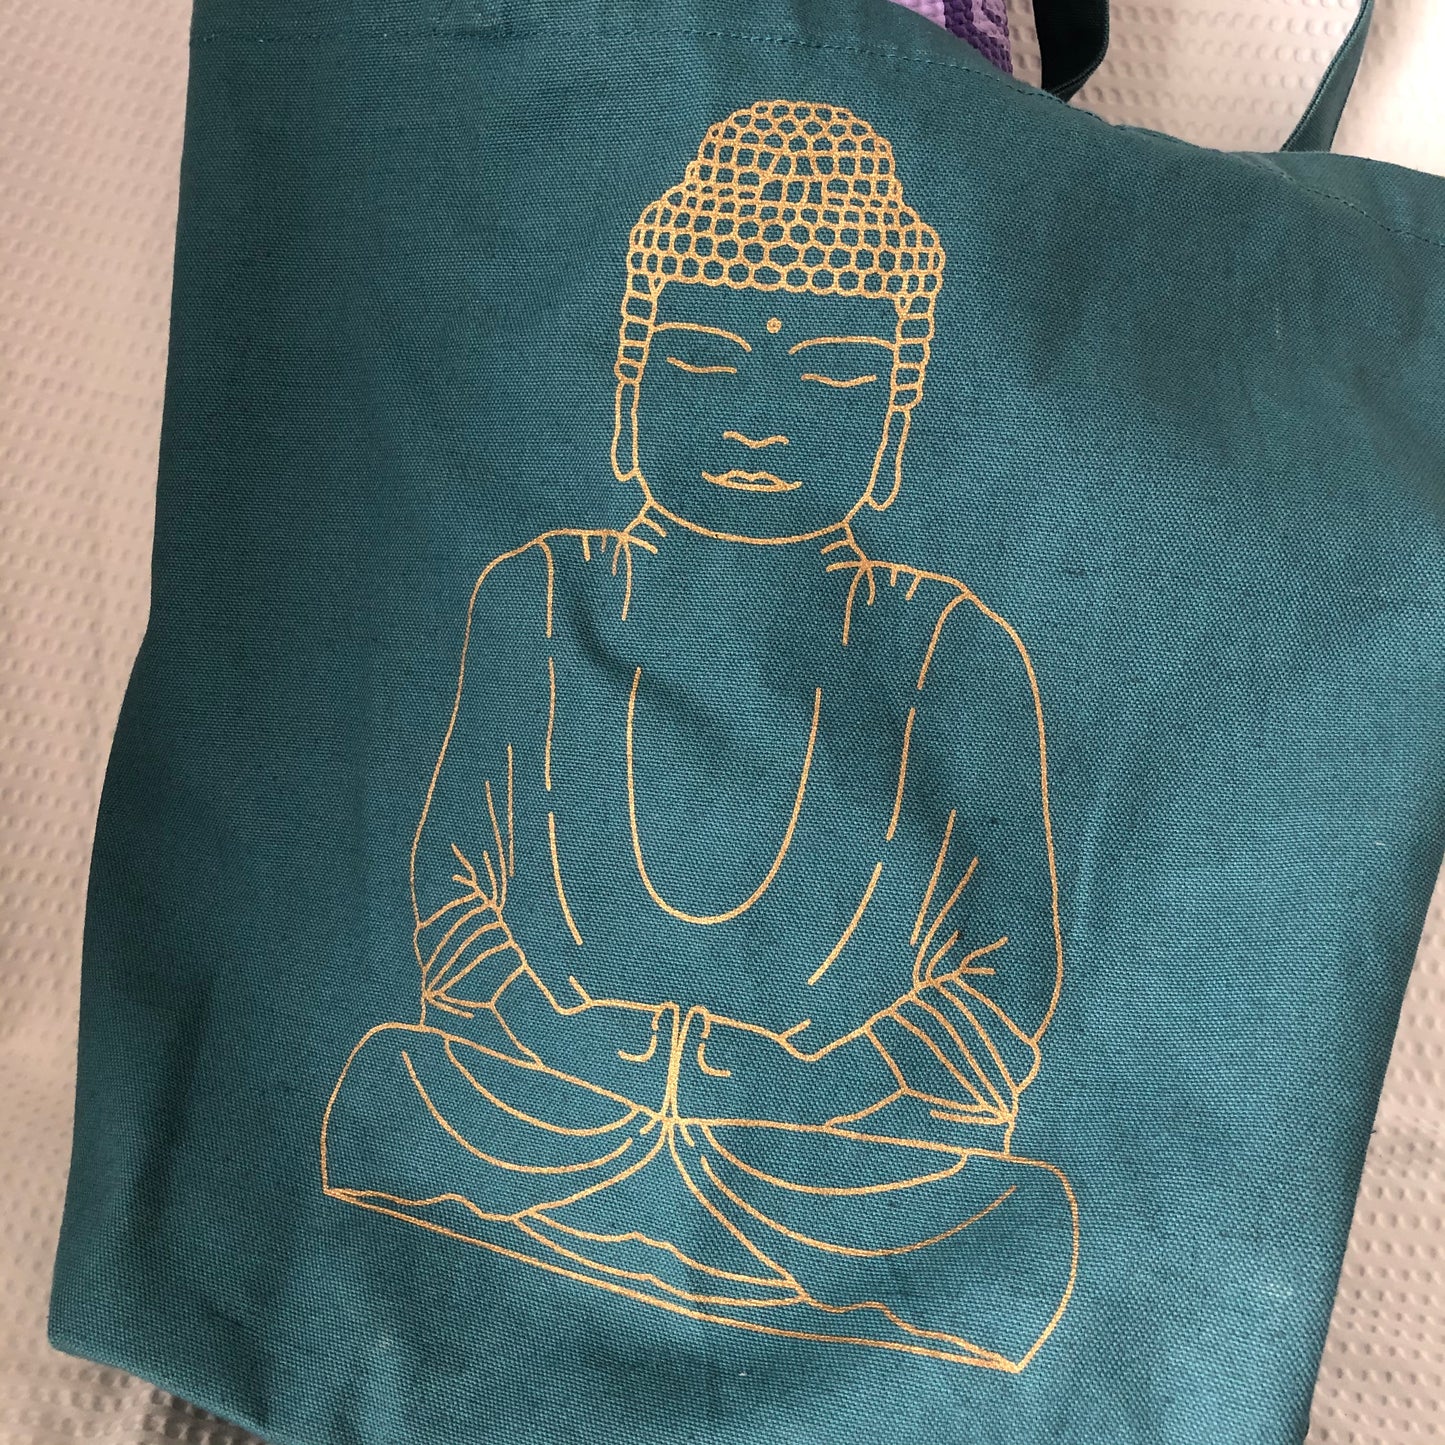 Gaiam Yoga Mat with Buddha Motif Tote Bag